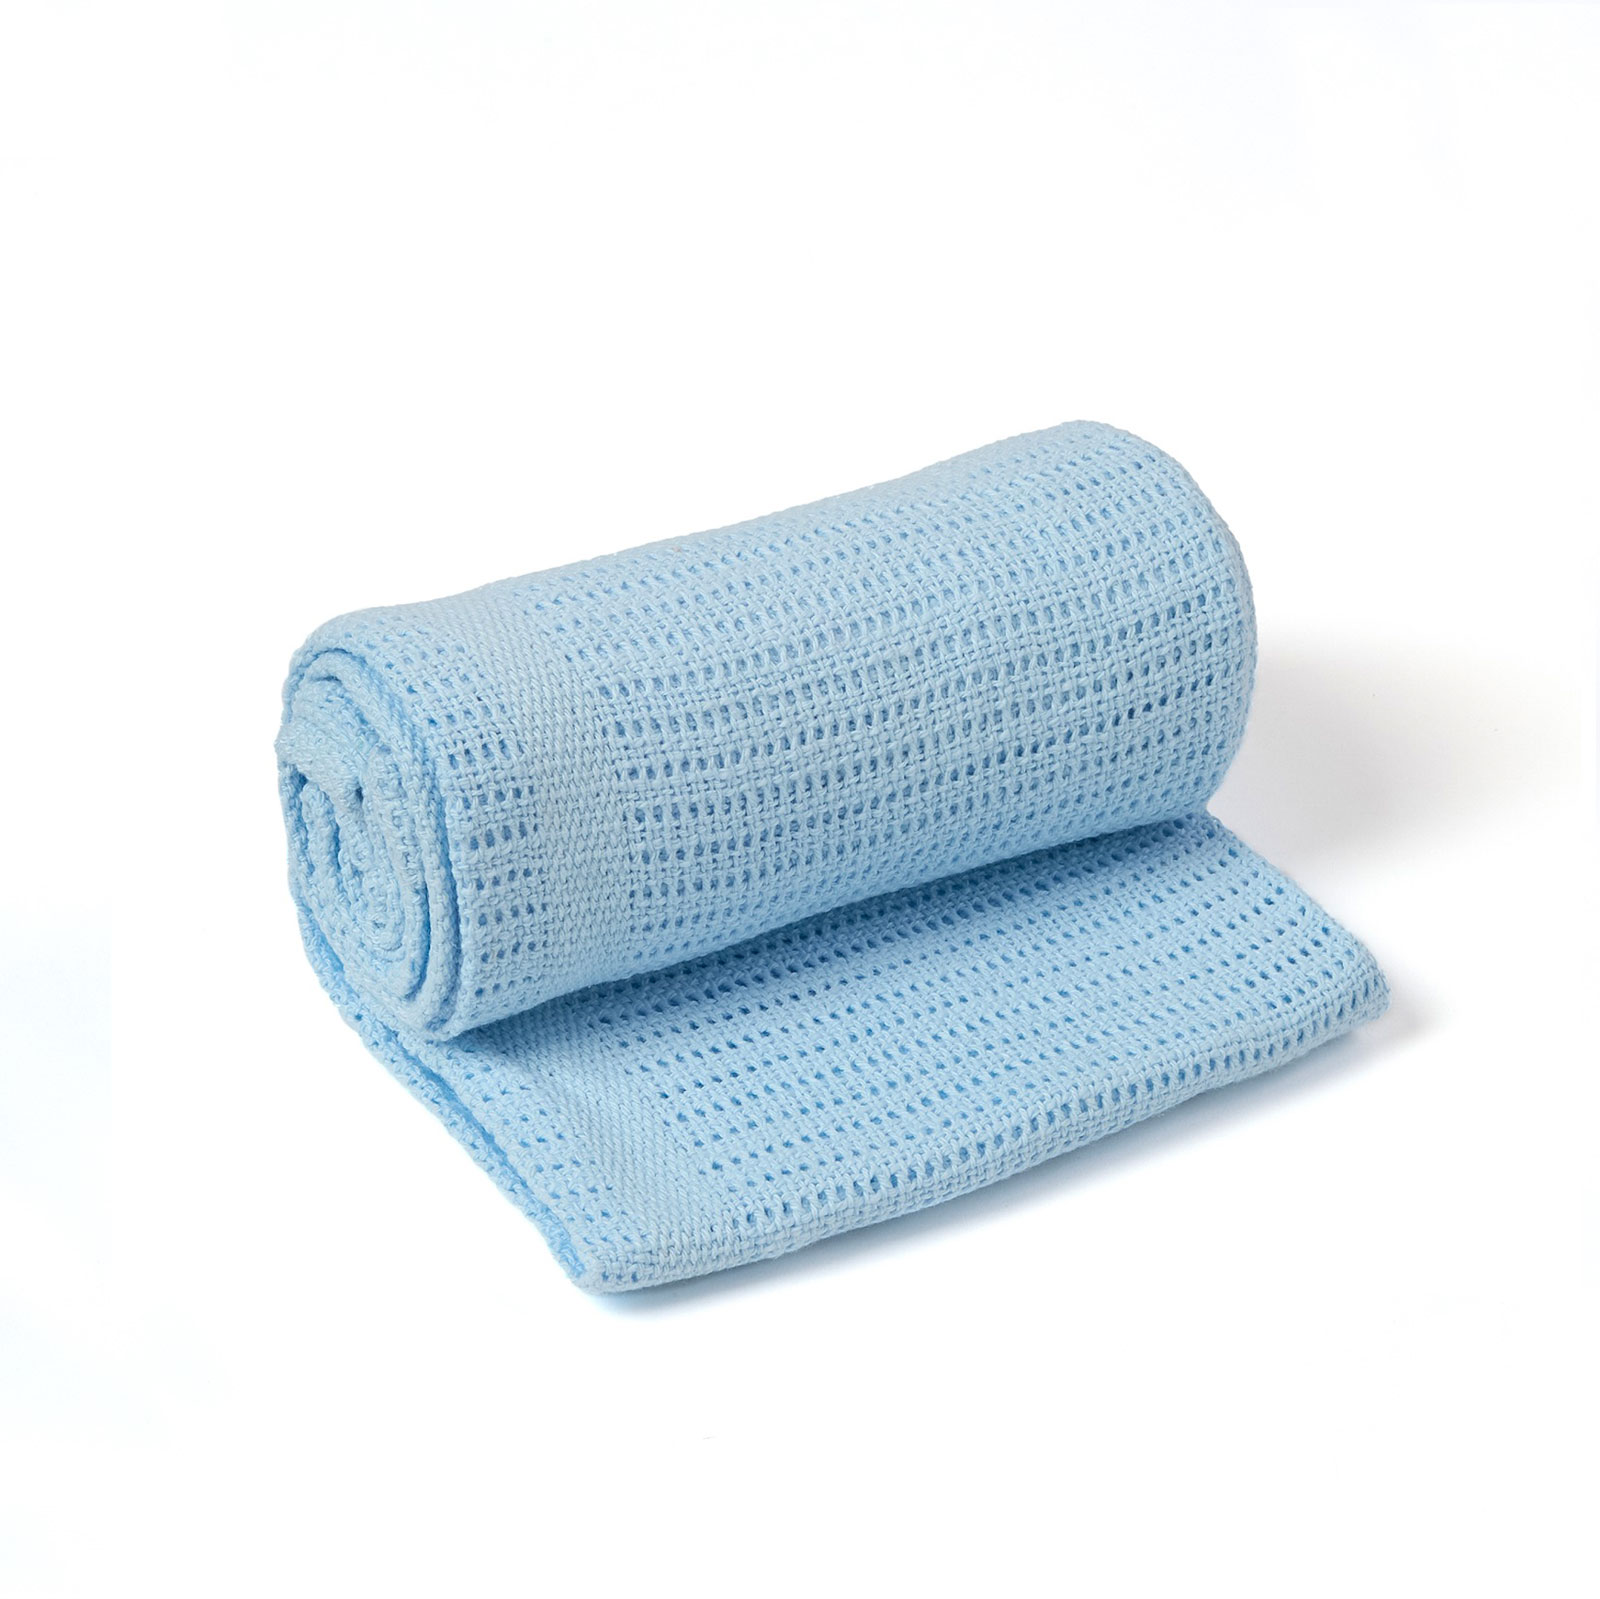 Soft Cotton Pram/Moses Basket/Crib Cellular Blanket - Blue